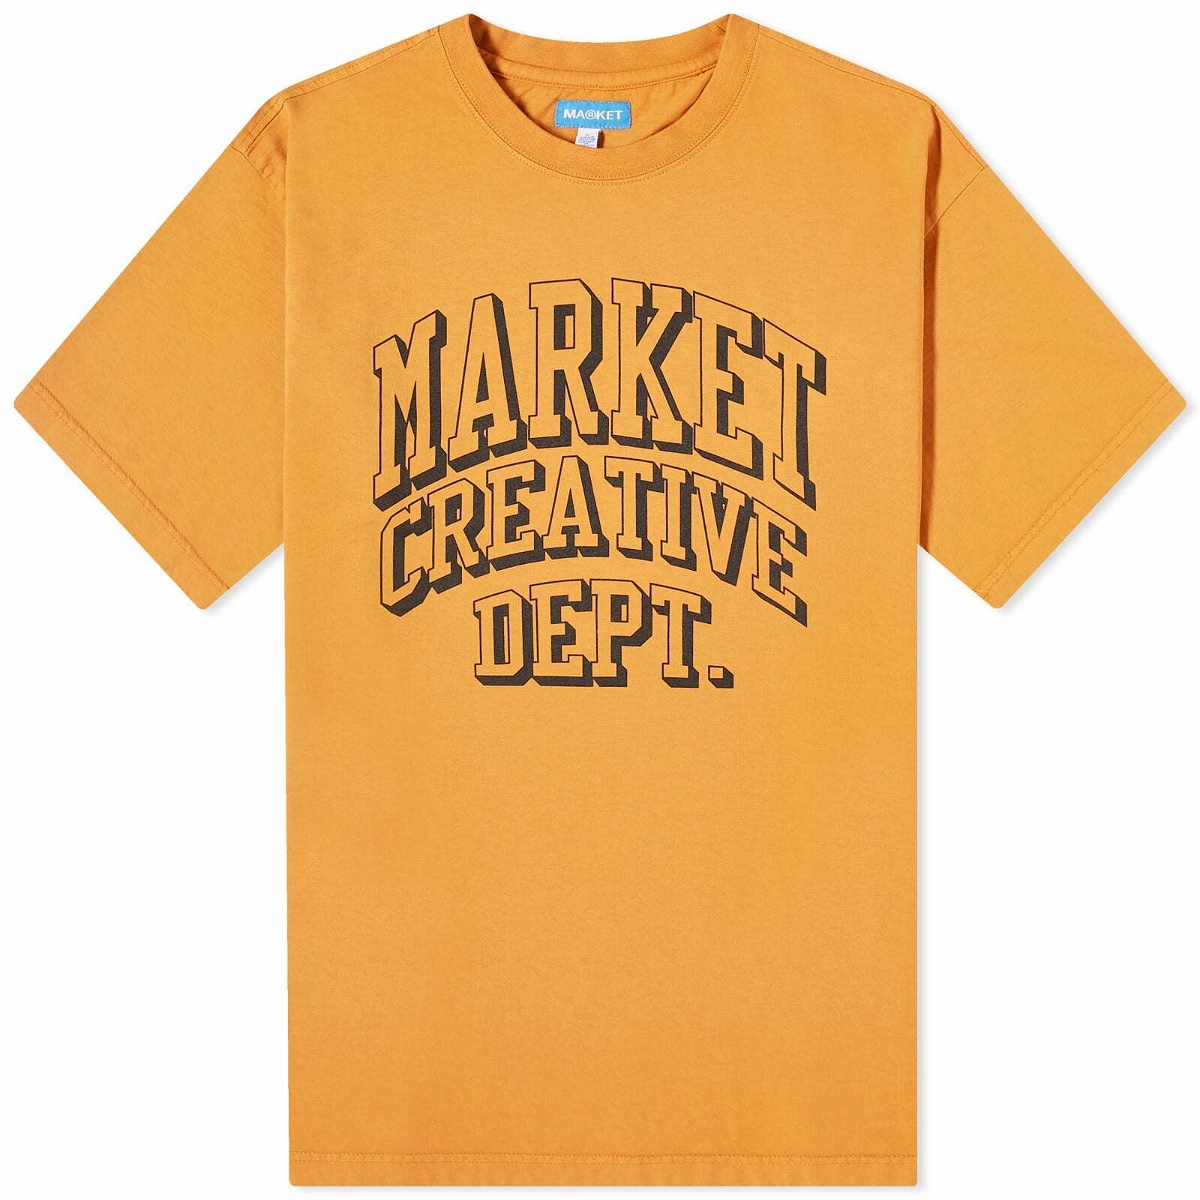 Photo: MARKET Men's Creatove Dept Arc T-Shirt in Earth